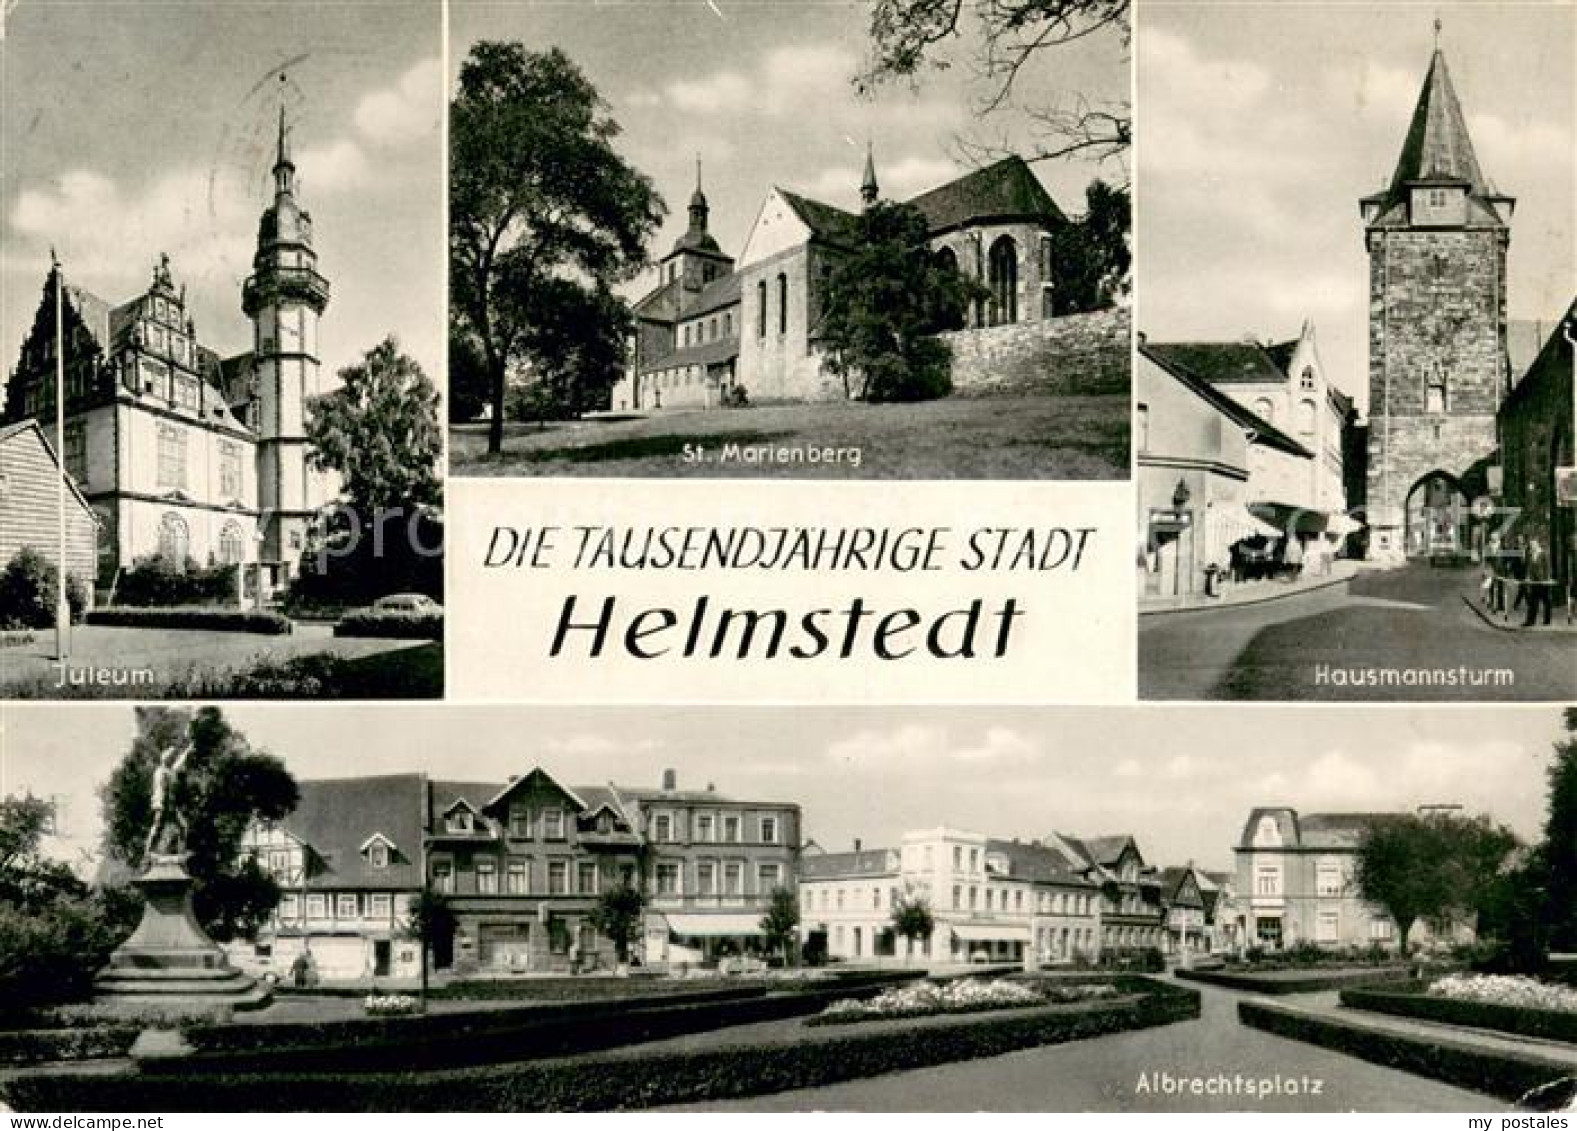 73615502 Helmstedt Juleum St Marienberg Hausmannsturm Albrechtsplatz Helmstedt - Helmstedt